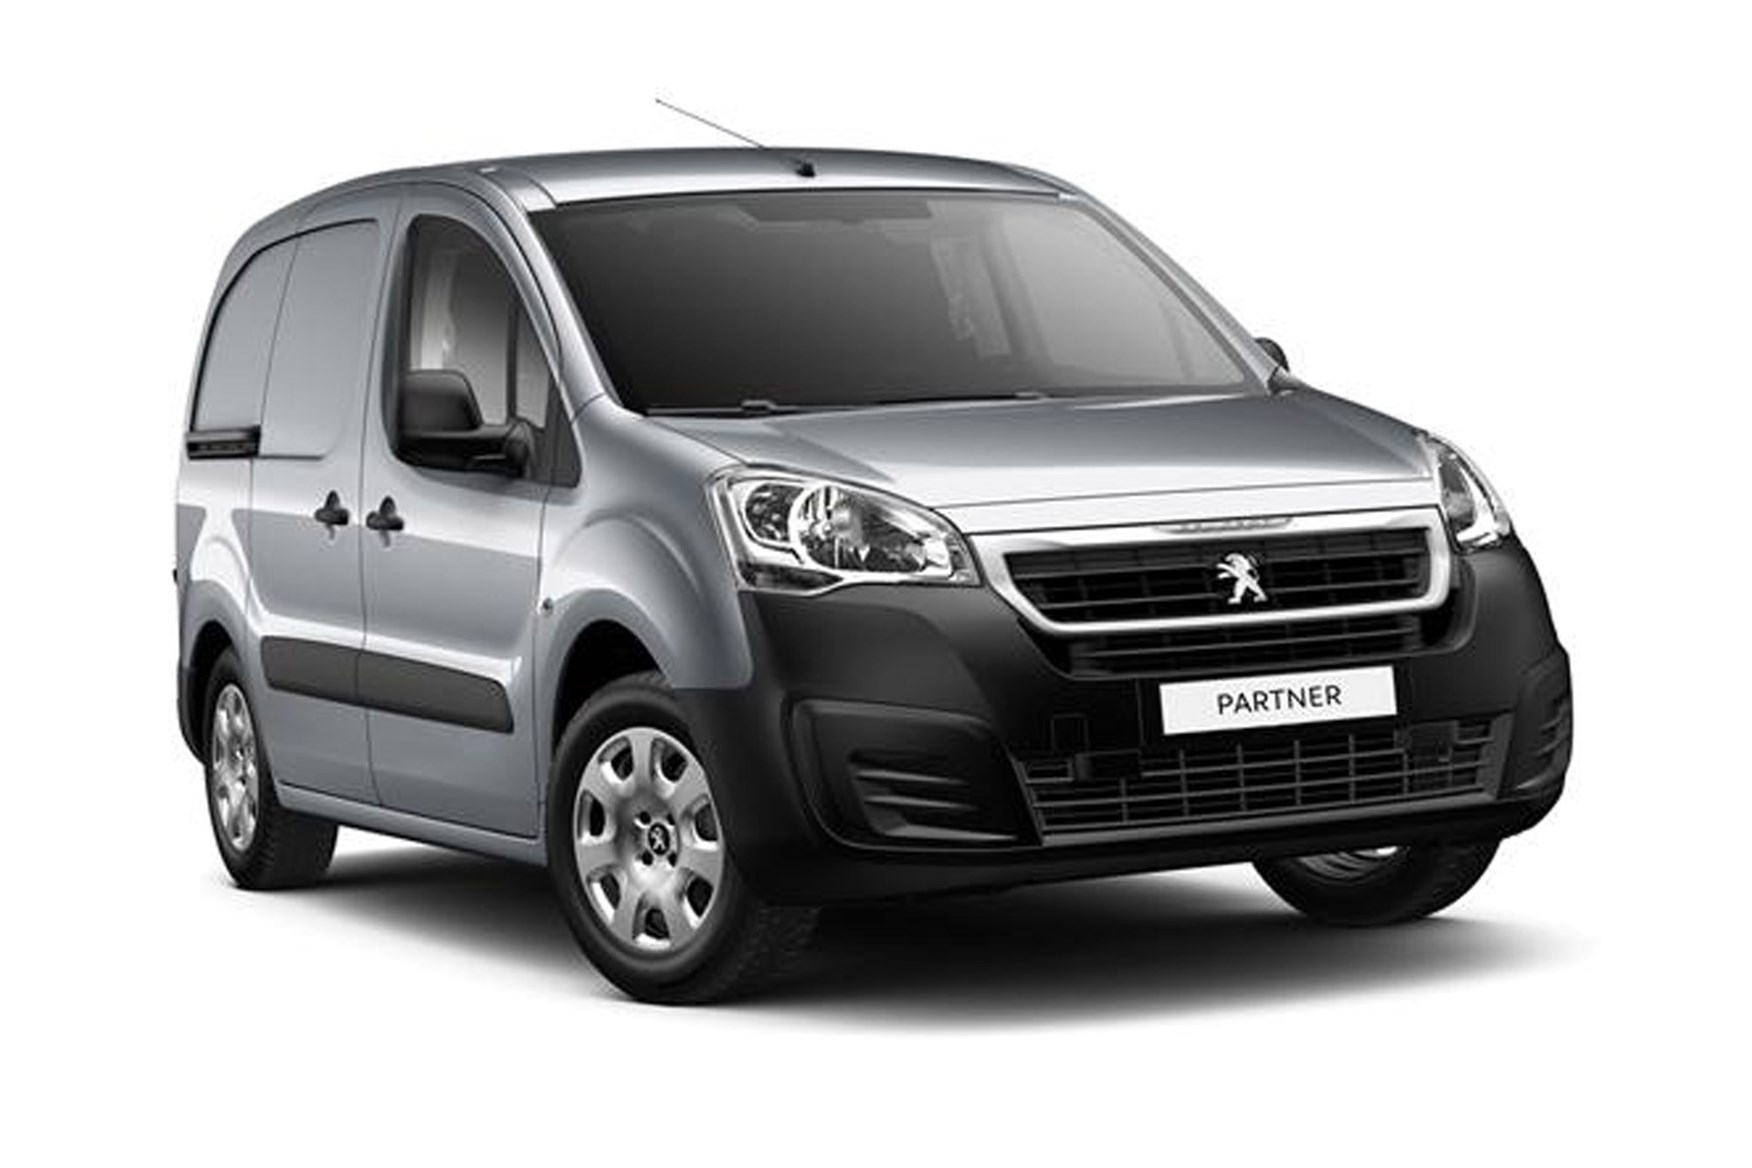 Peugeot Partner full review on Parkers Vans - 2015 facelift exterior